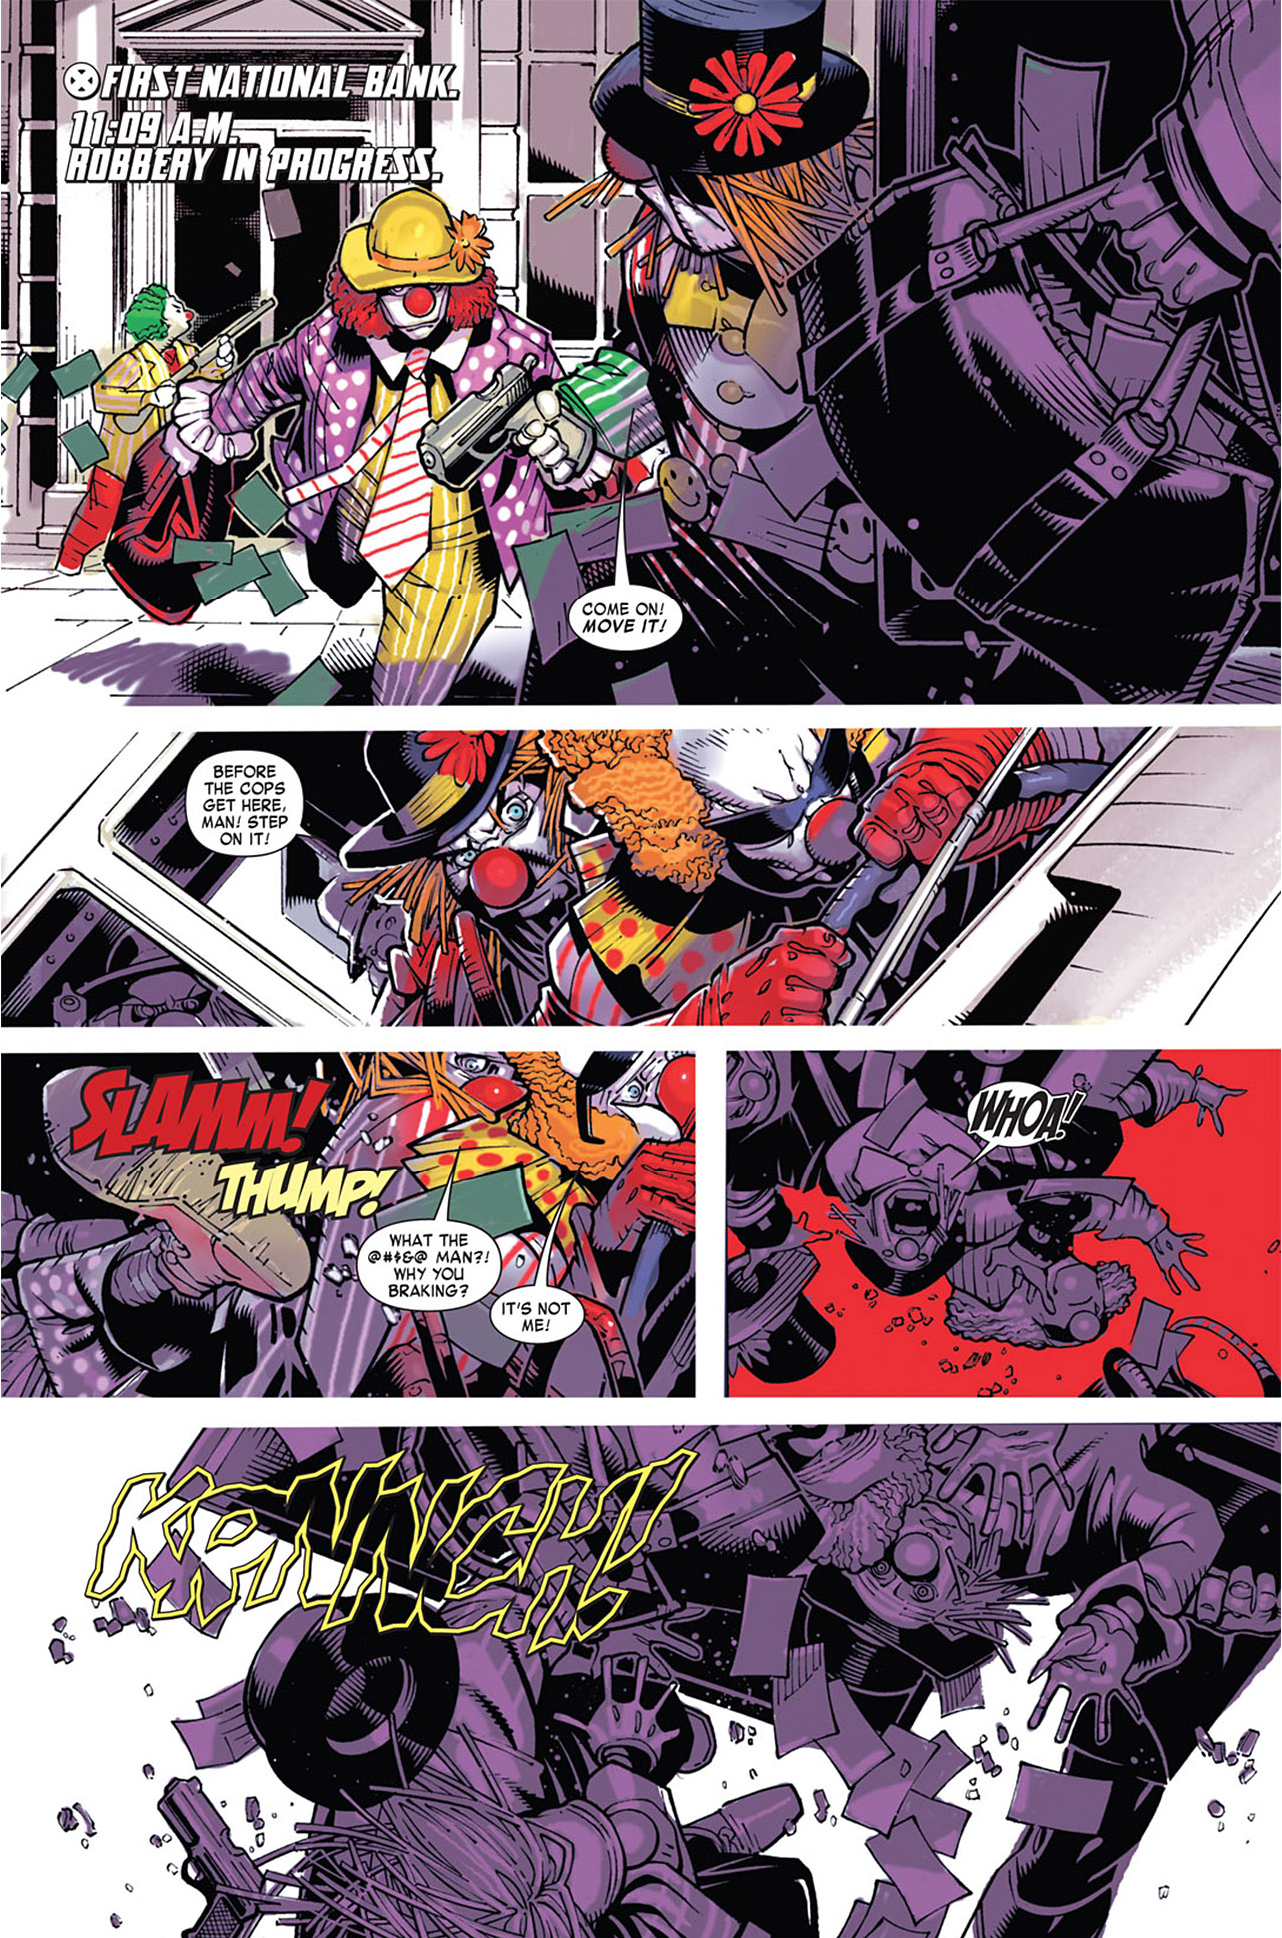 Colossus (X-Men Vol. 3 #7) 